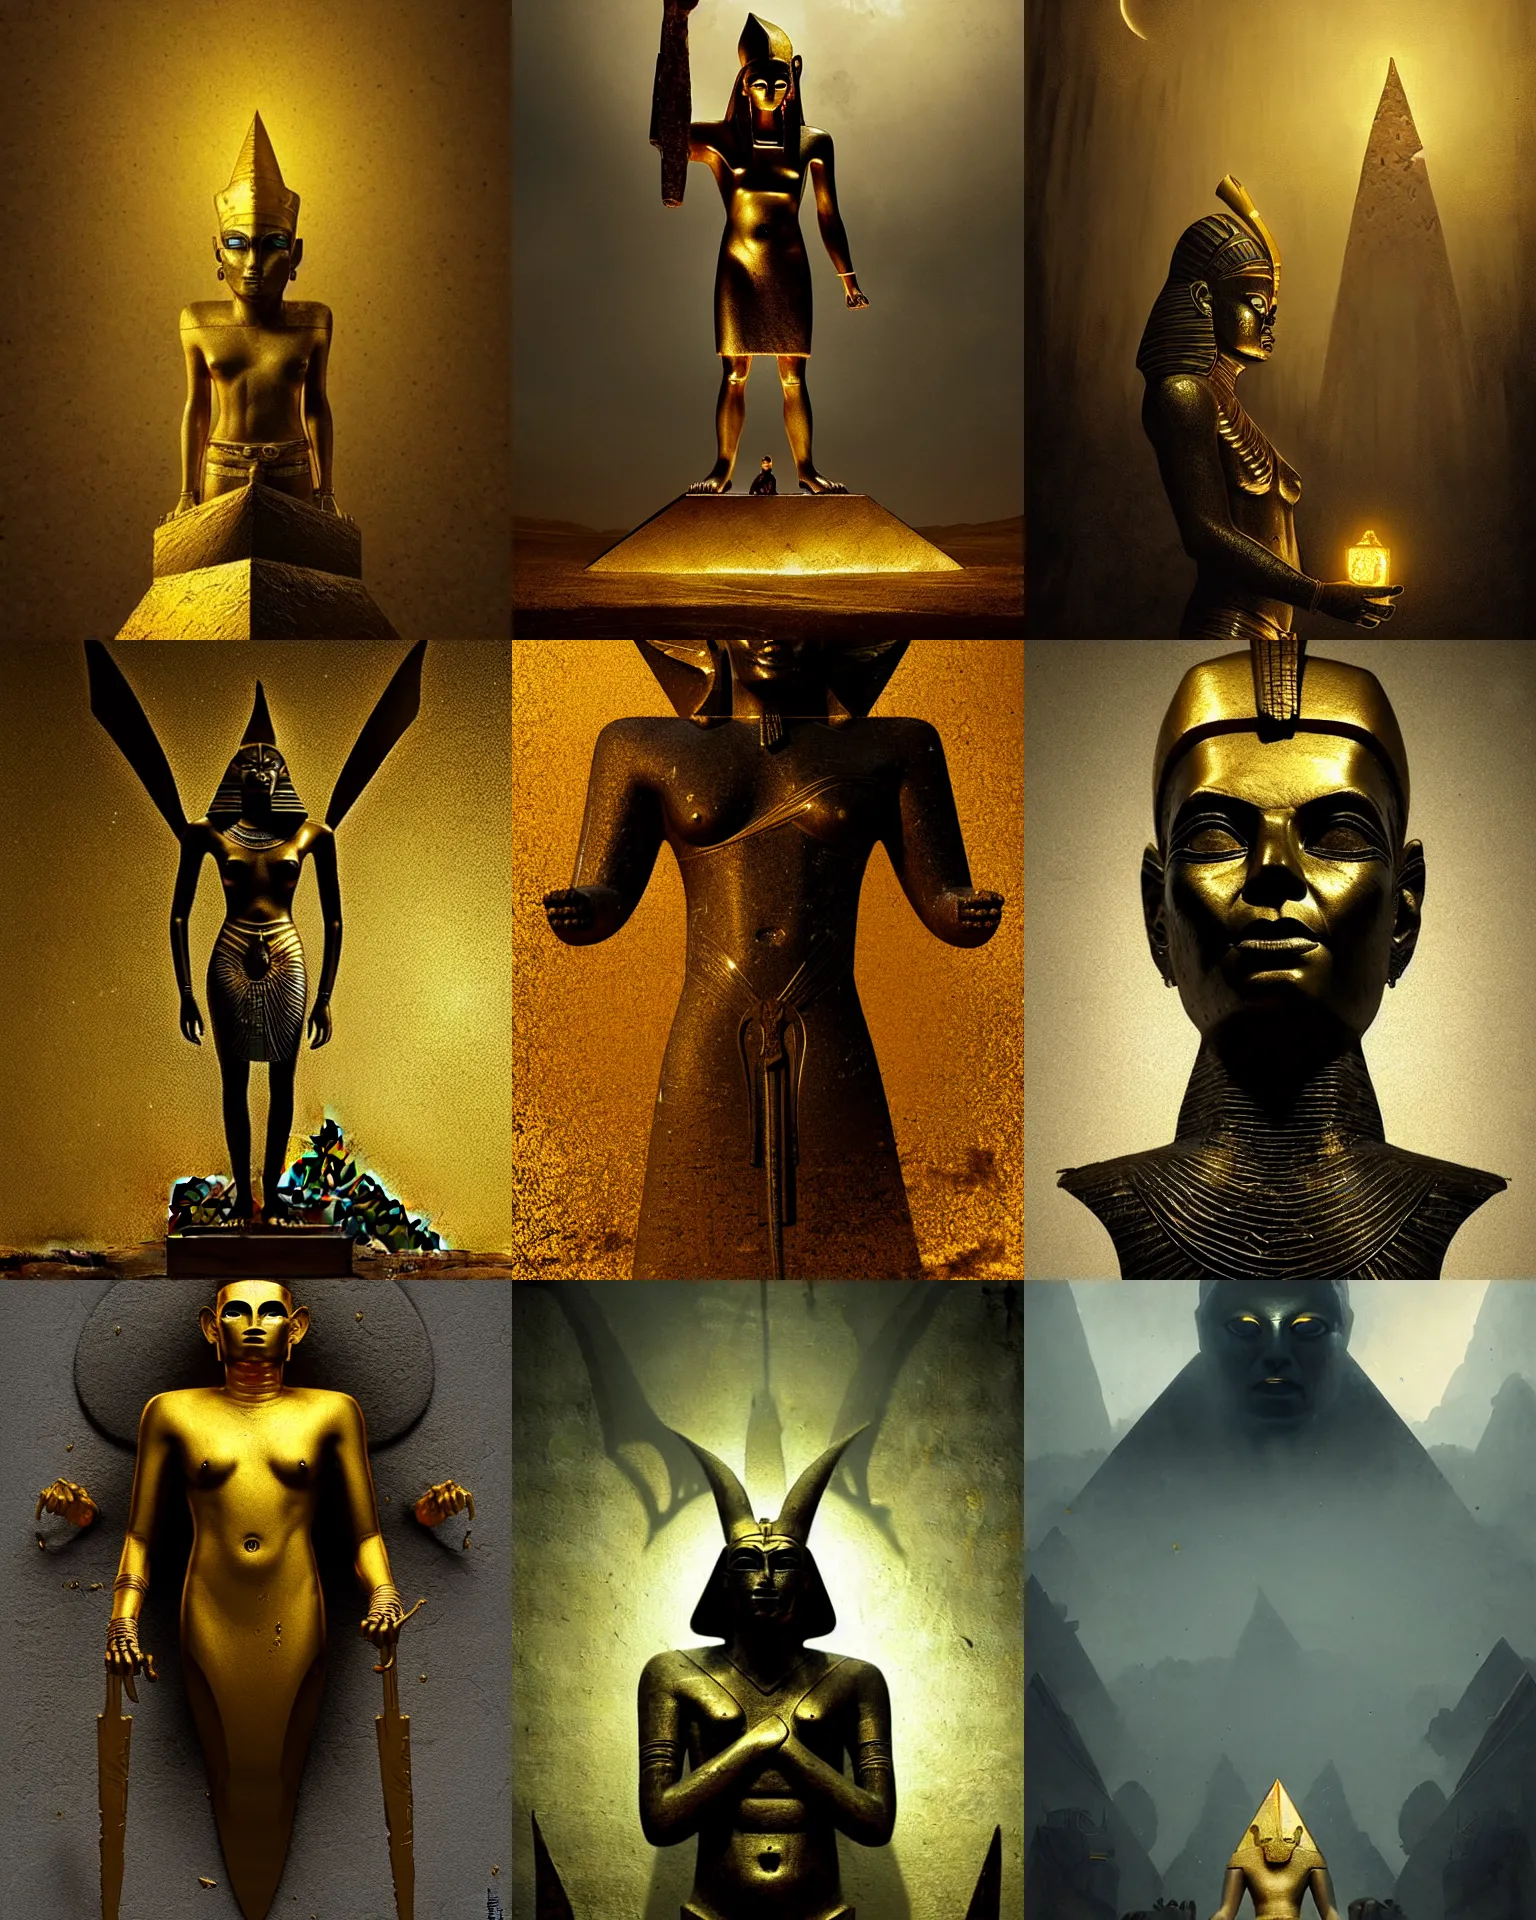 Prompt: giantic gold scarabee statue, darkness, egypt piramids background, fantasy art, evil fluid, creepy, by greg rutkowski